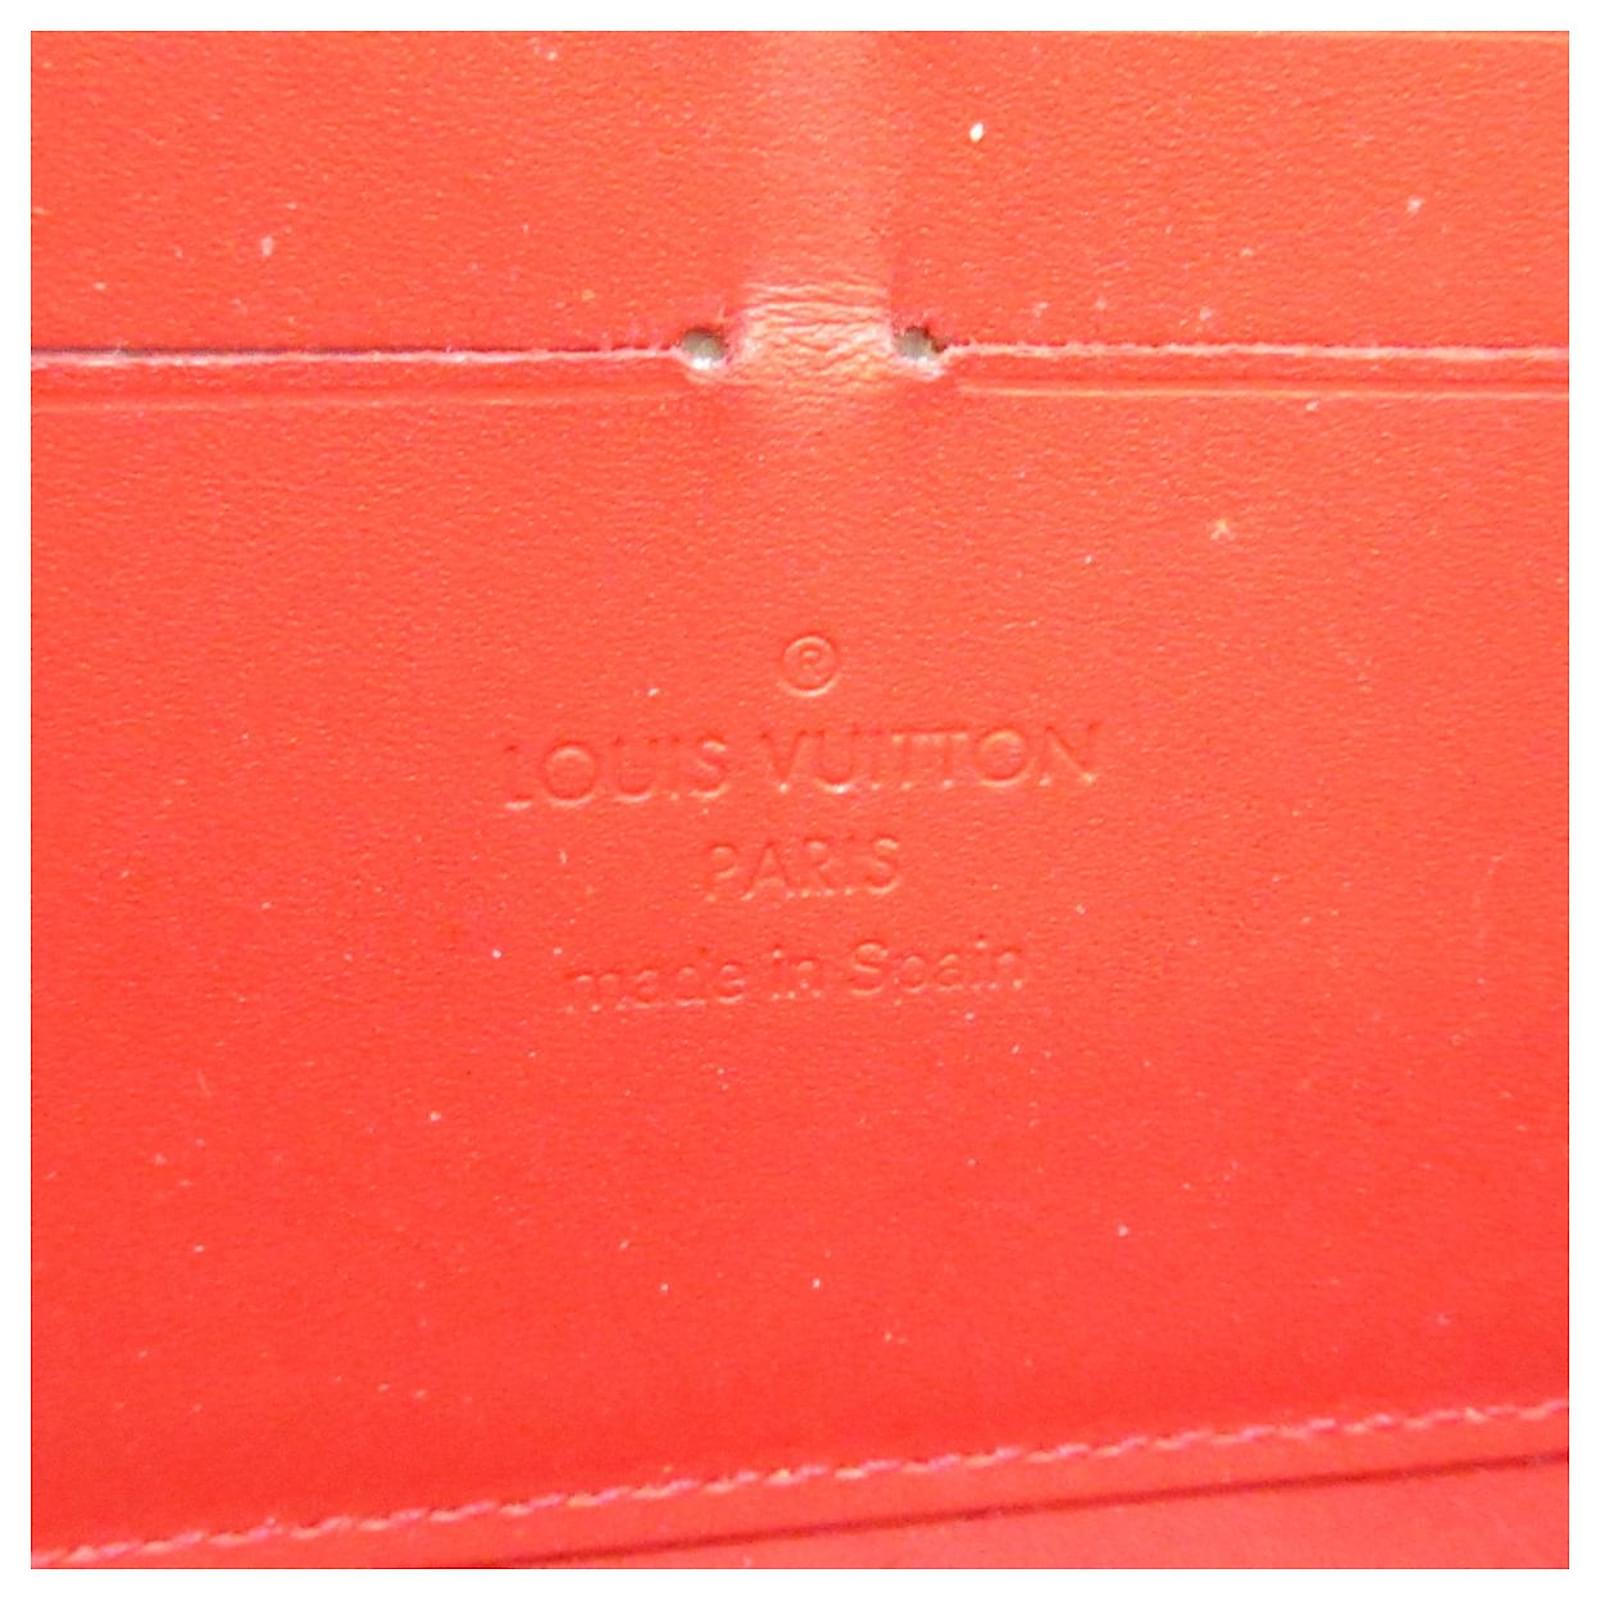 Louis Vuitton - Zippy Wallet - Leather - Taupe - Women - Luxury